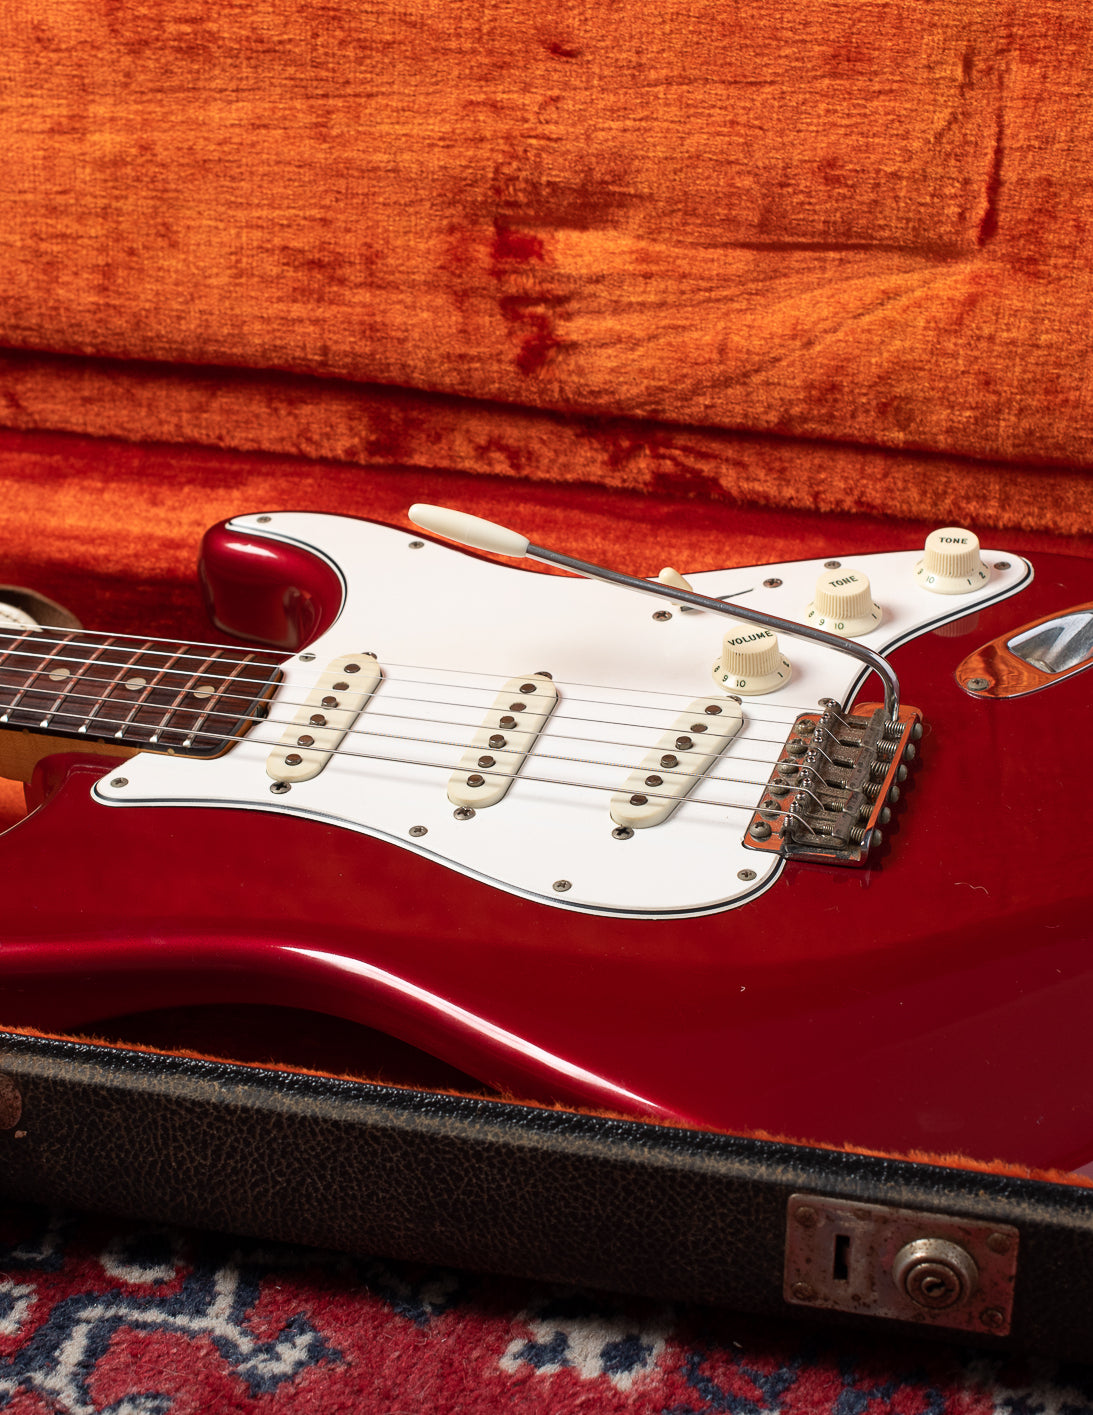 Fender Stratocaster in case